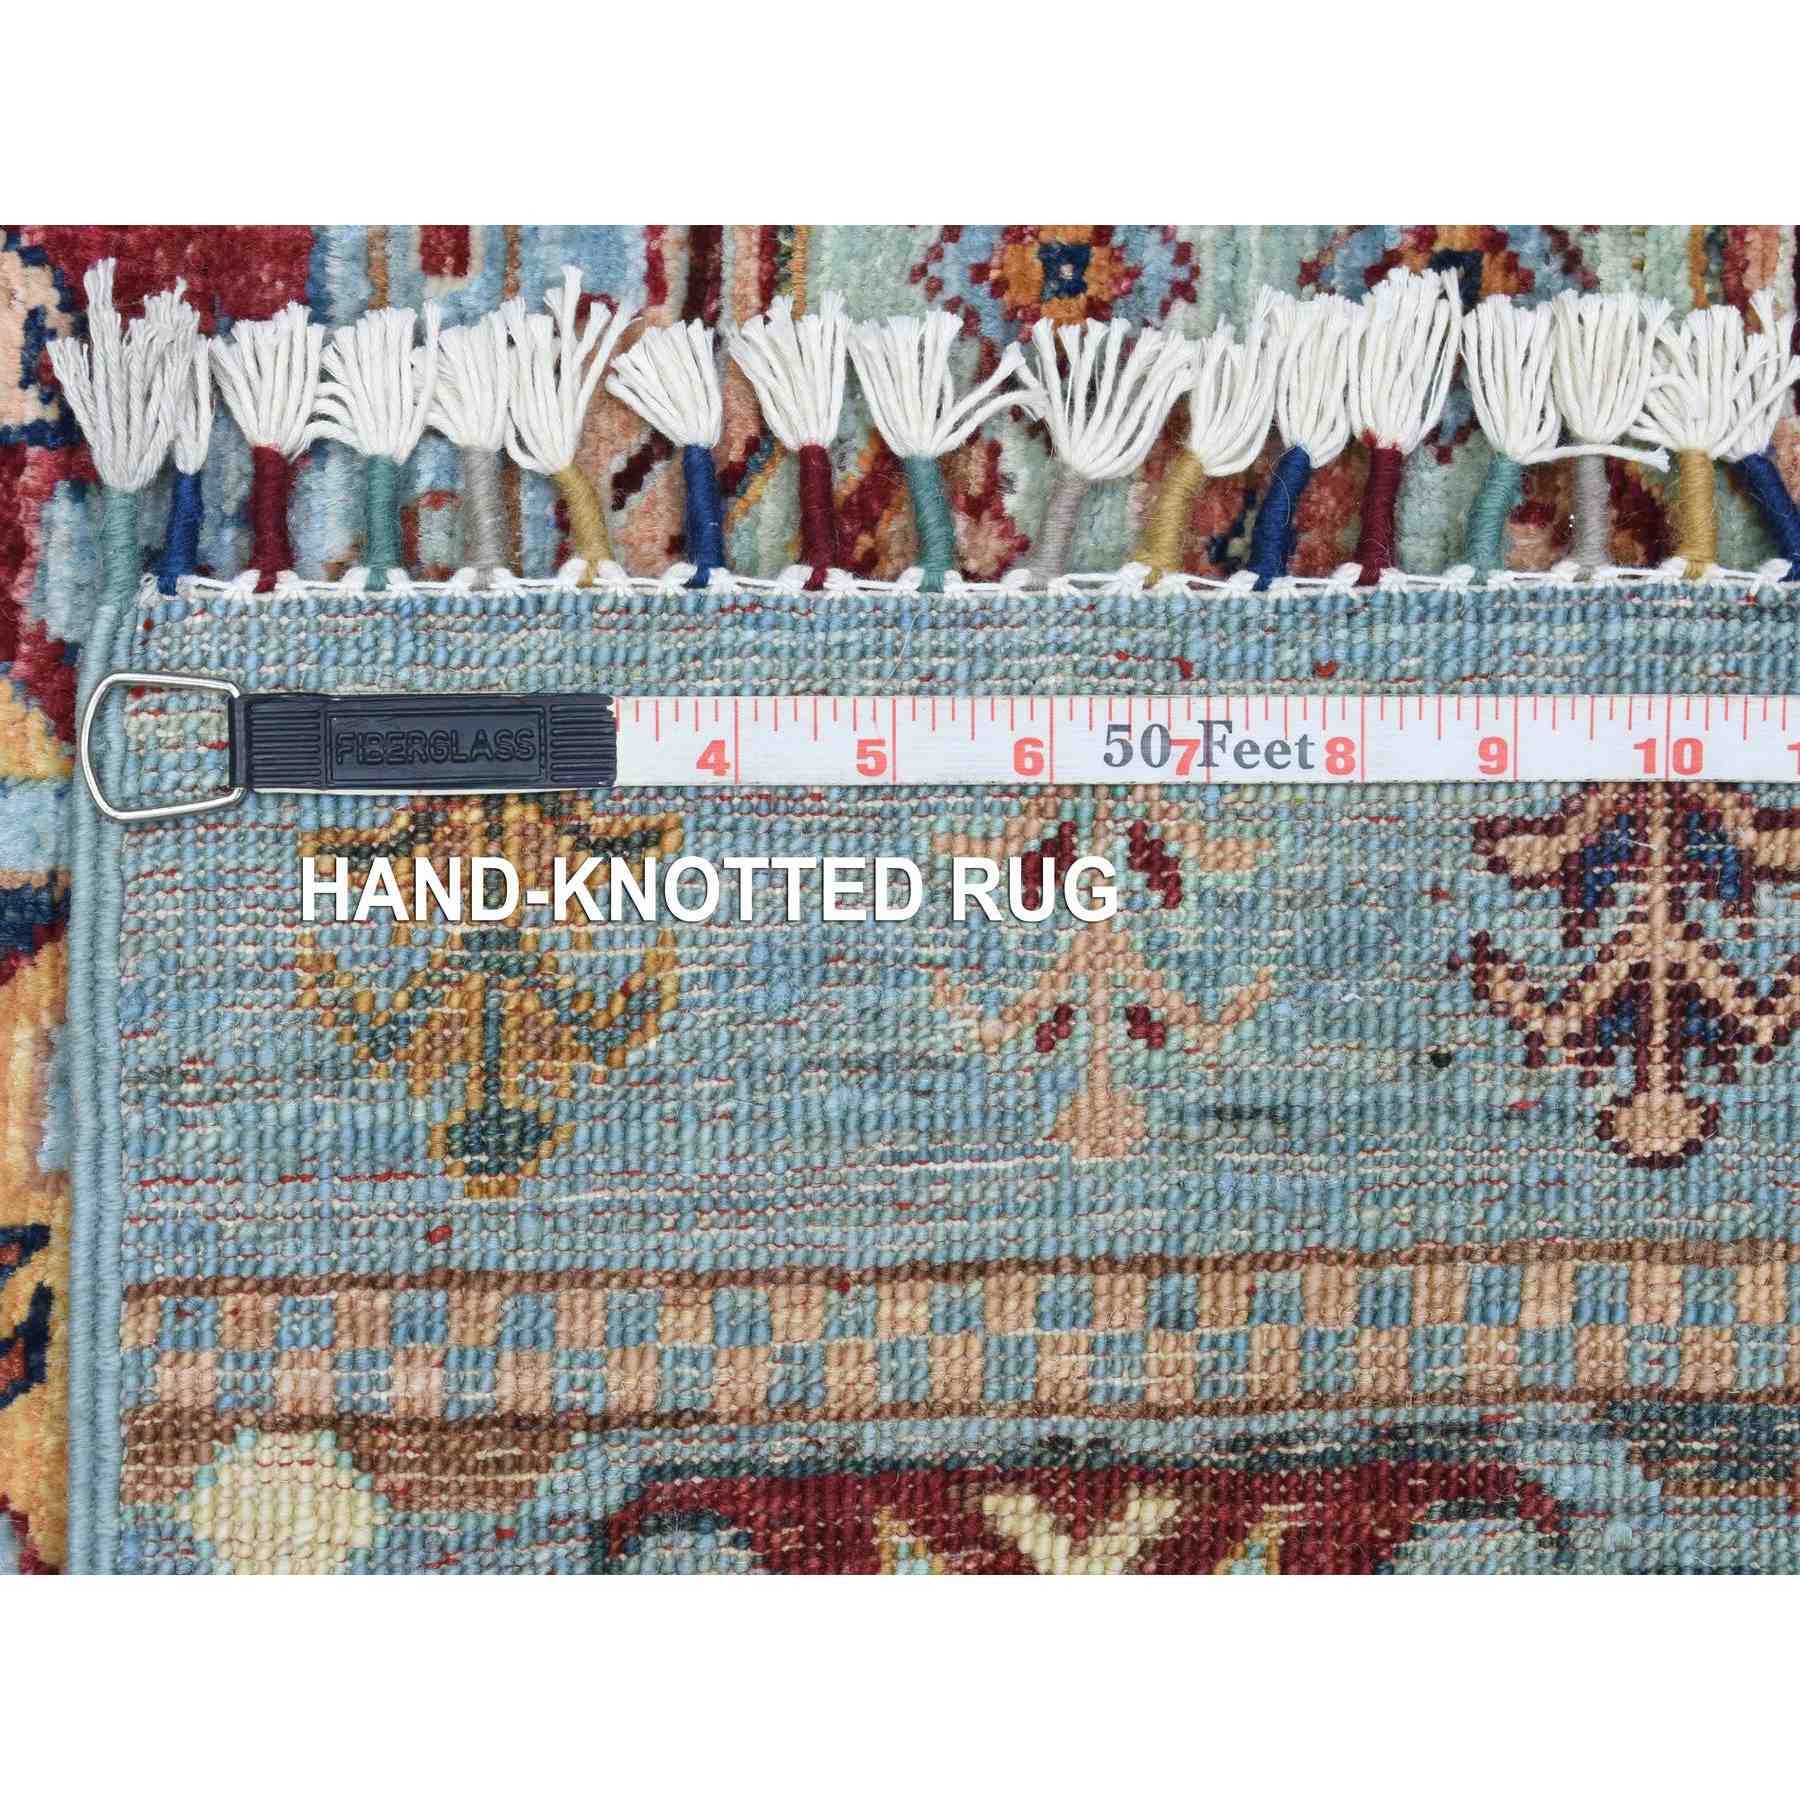 Kazak-Hand-Knotted-Rug-364255